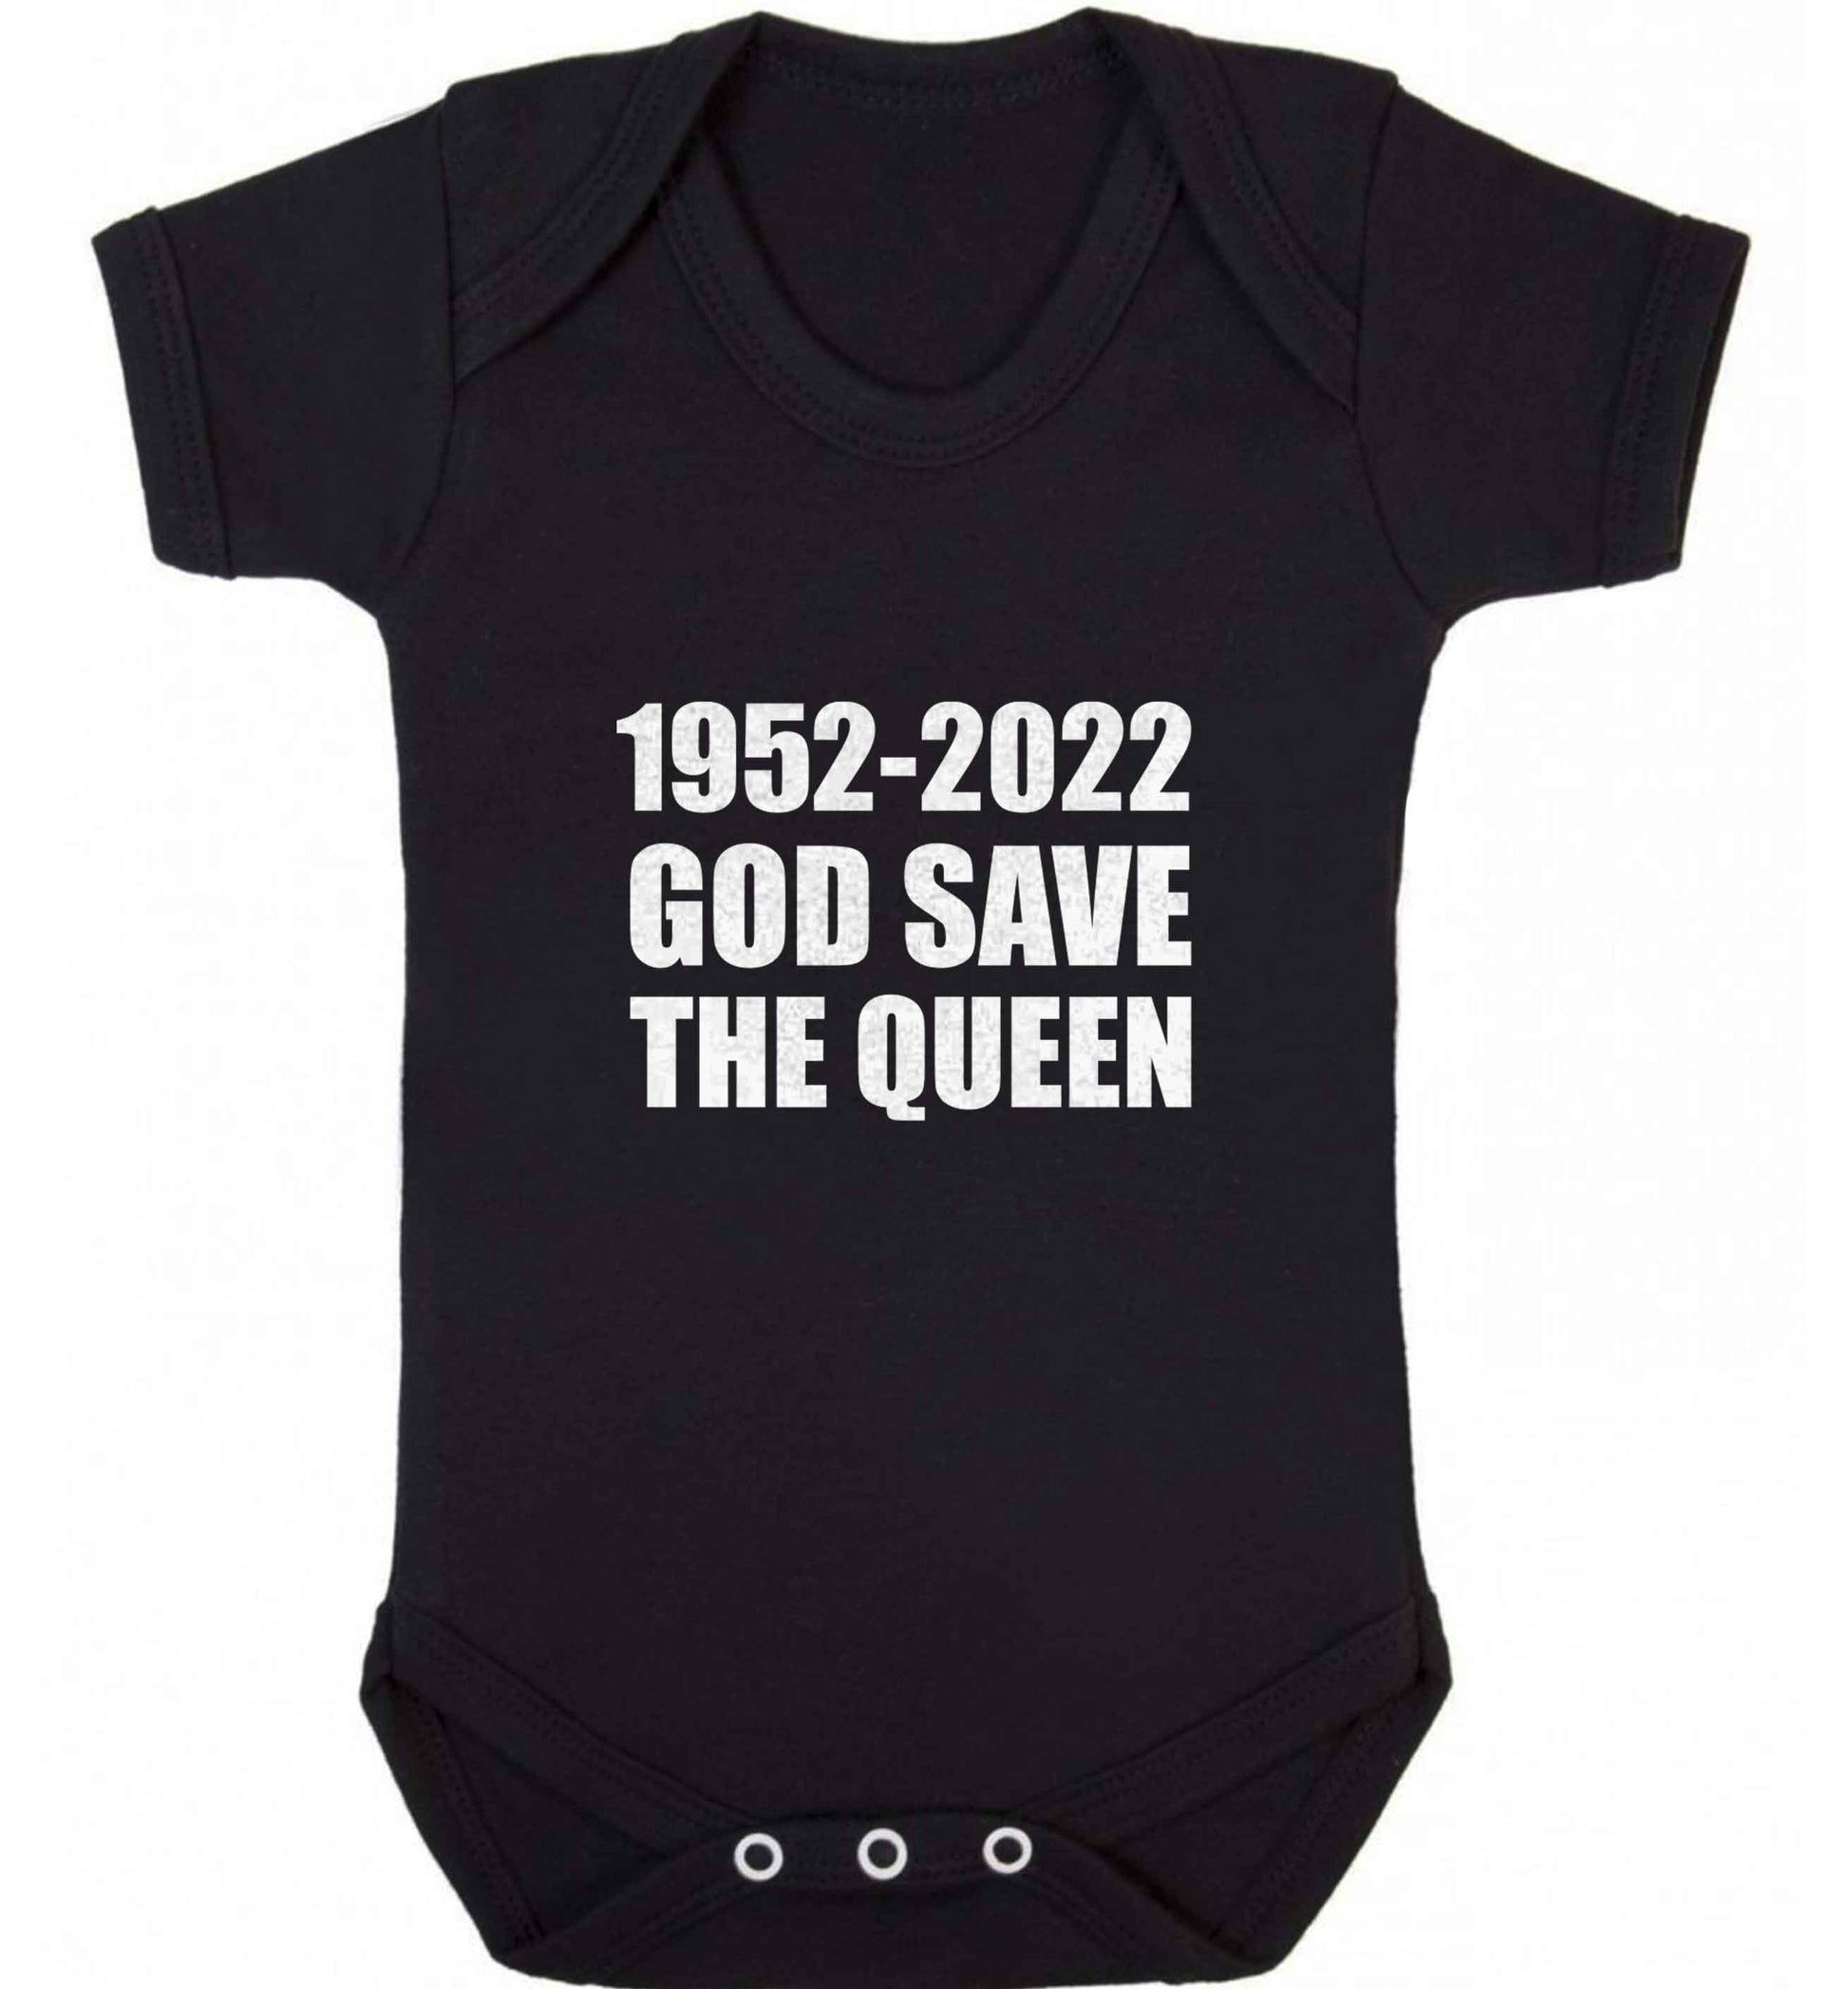 God save the queen baby vest black 18-24 months